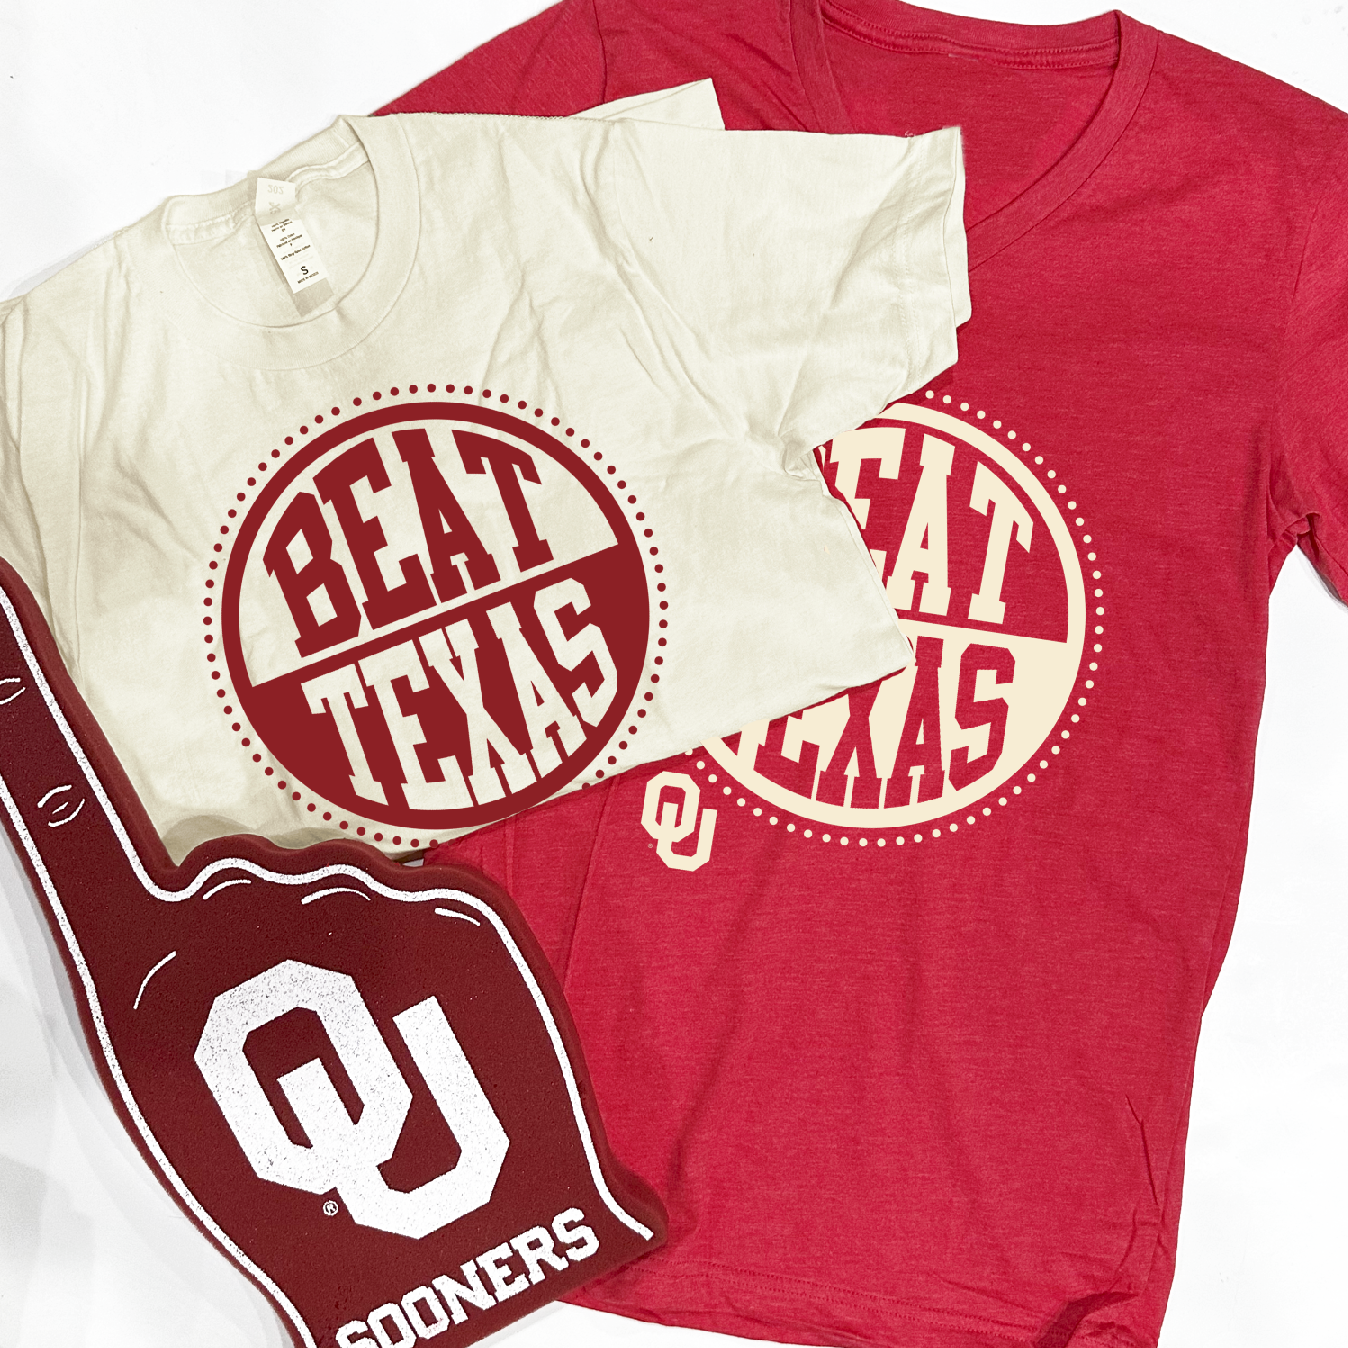 UNIV. of OK : Beat Texas!